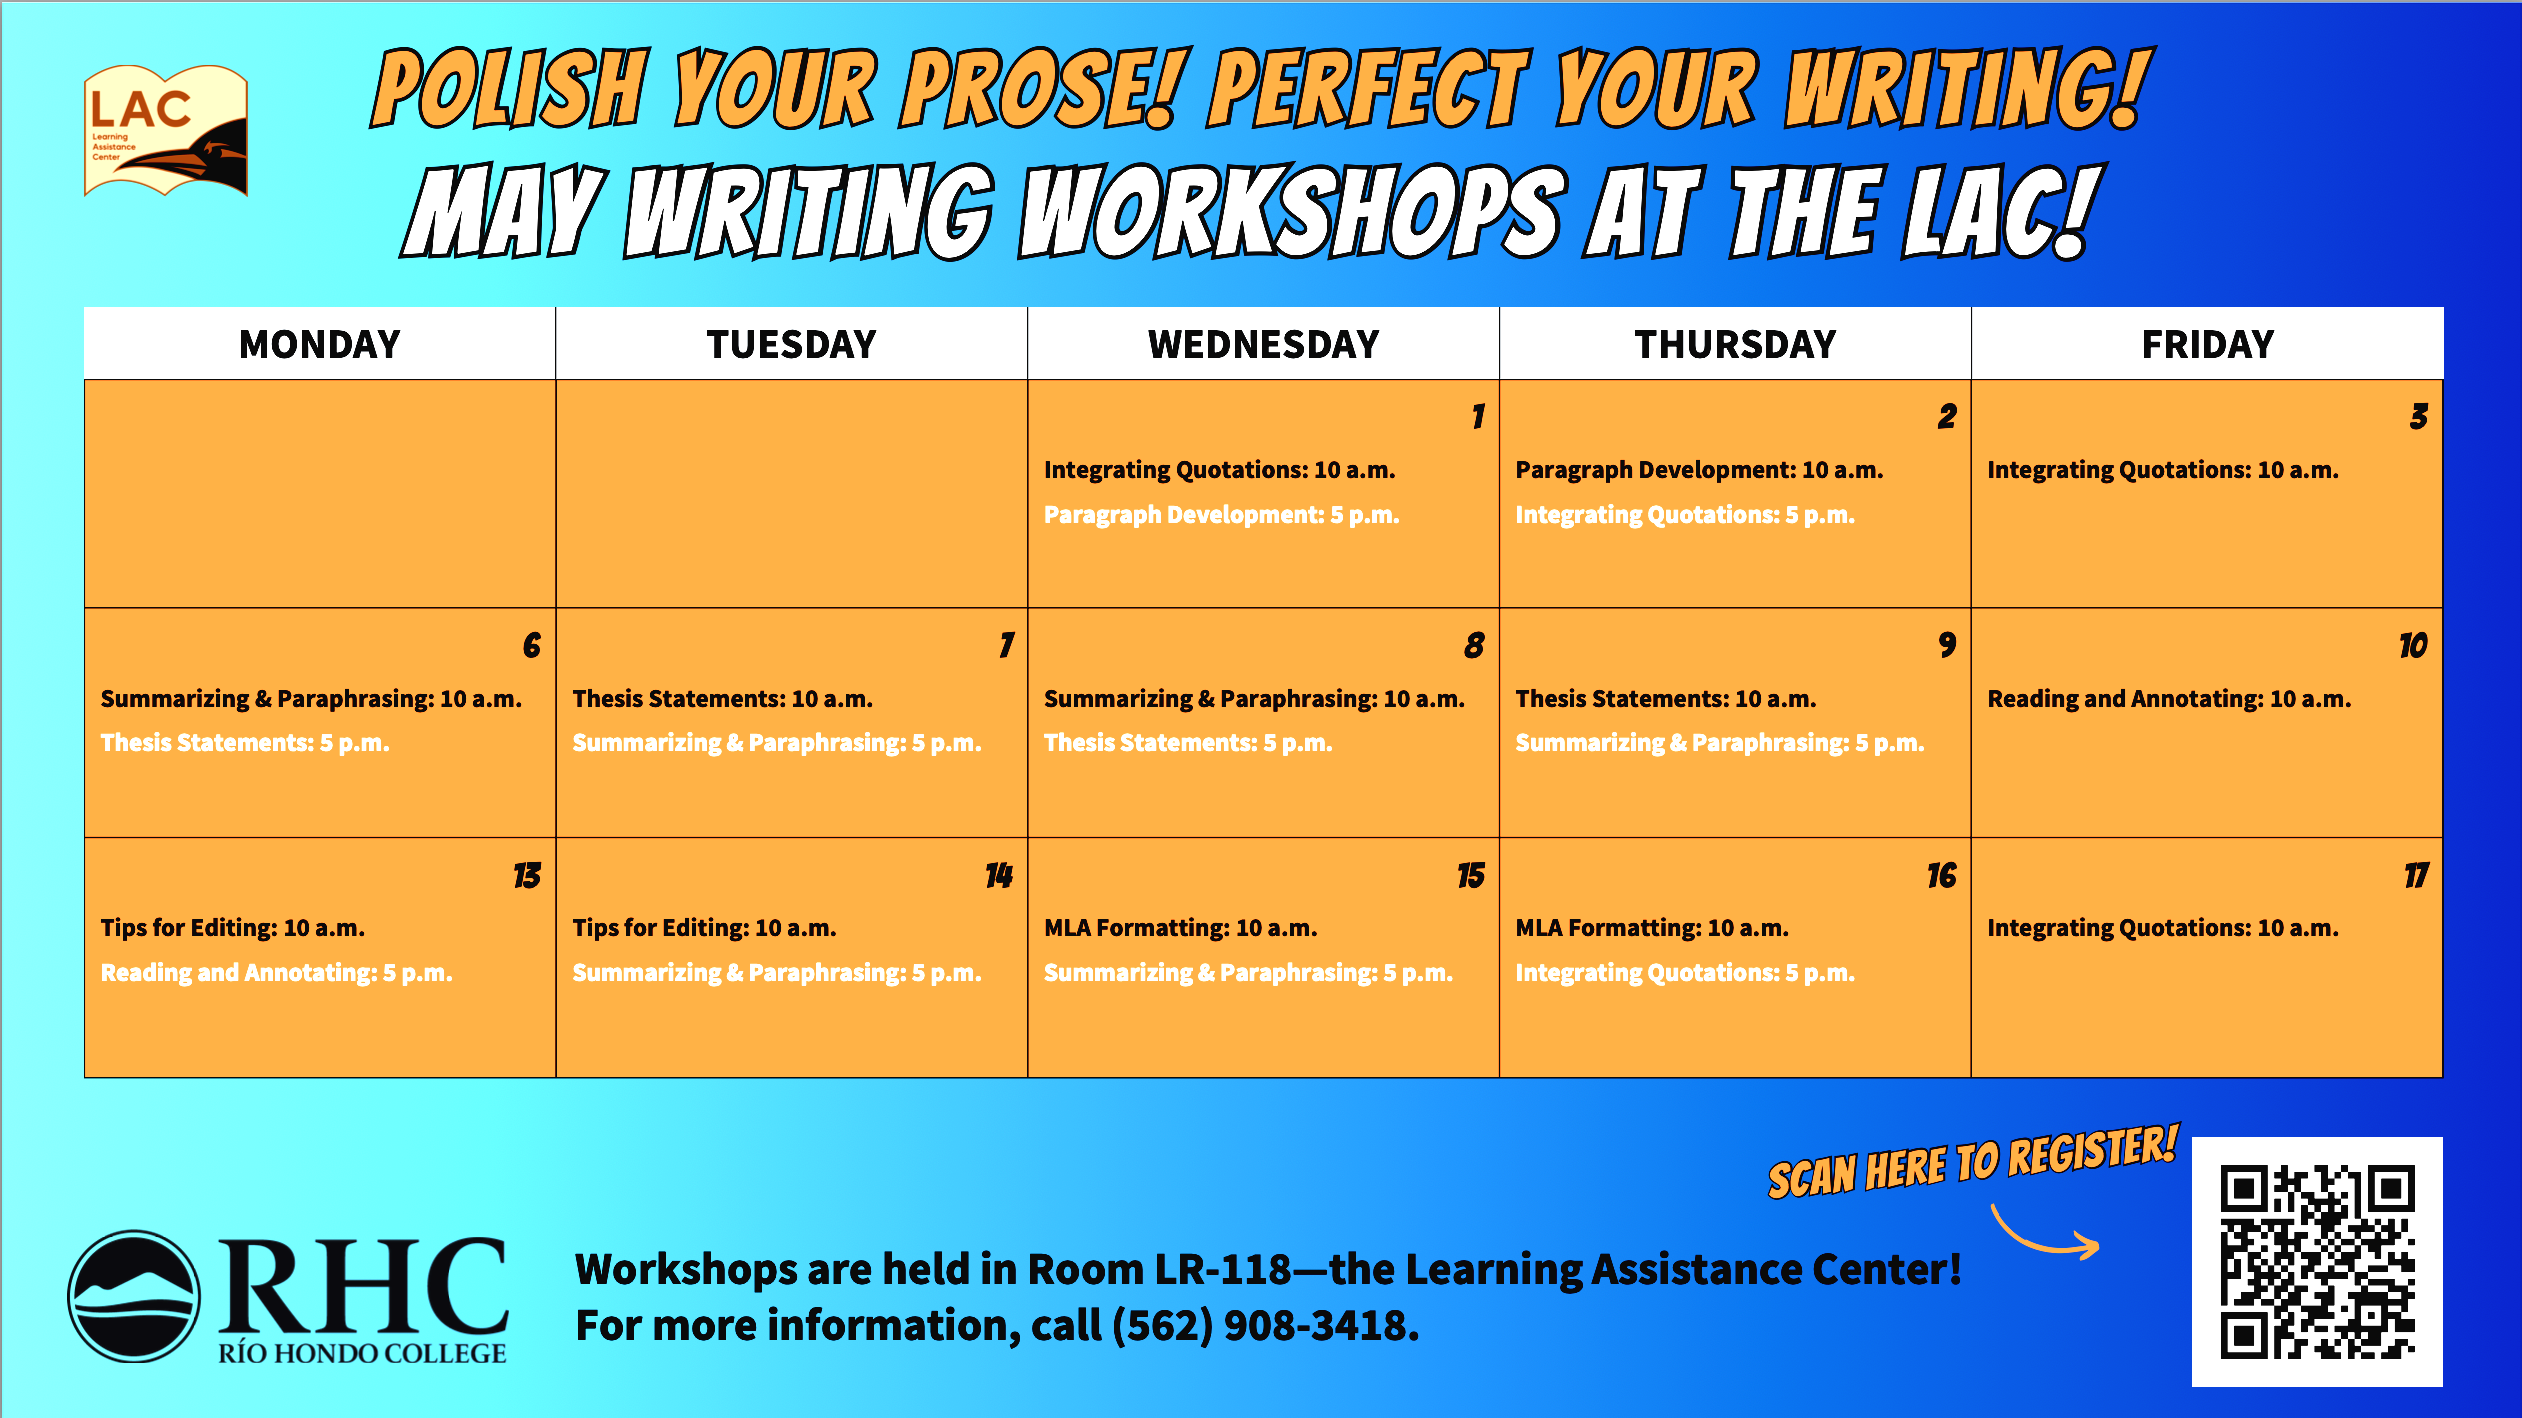 May Writing workshops at the LAC